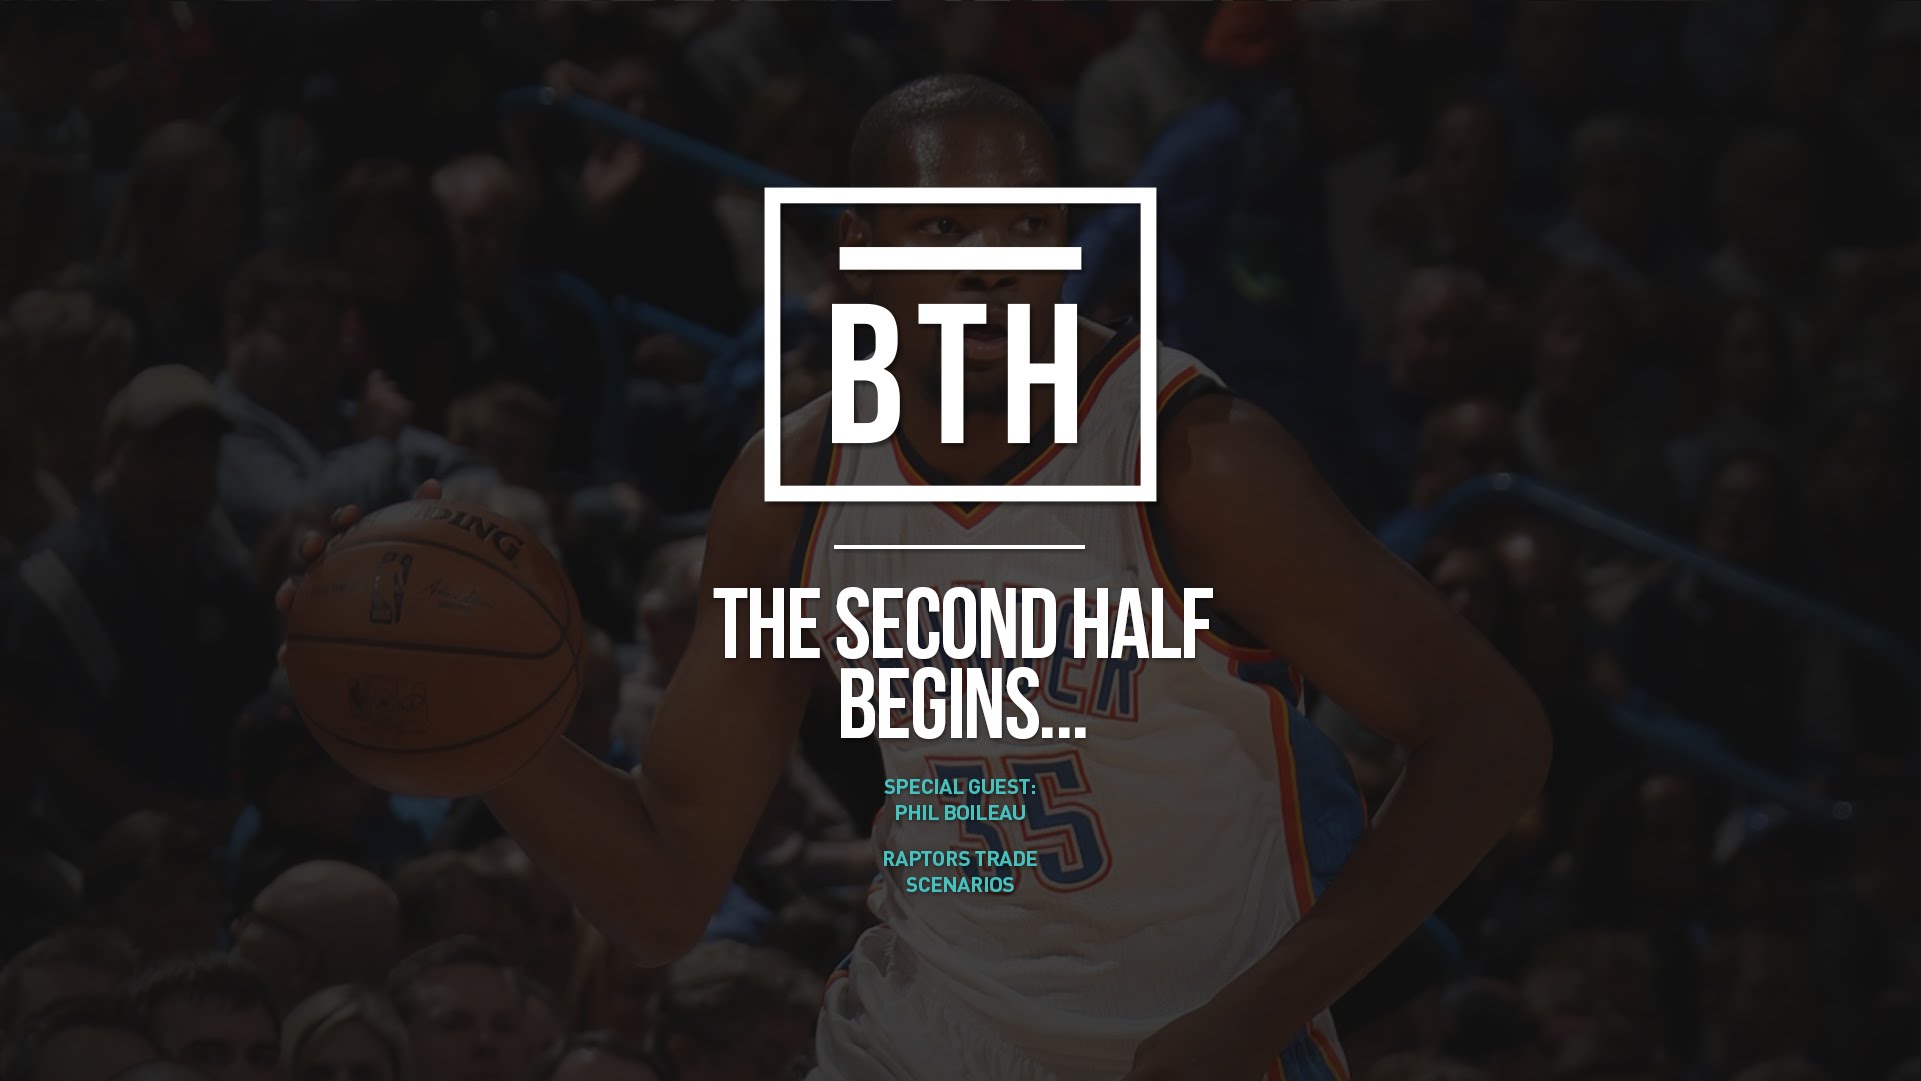 Below The Hardwood discuss the 2nd half of the NBA season